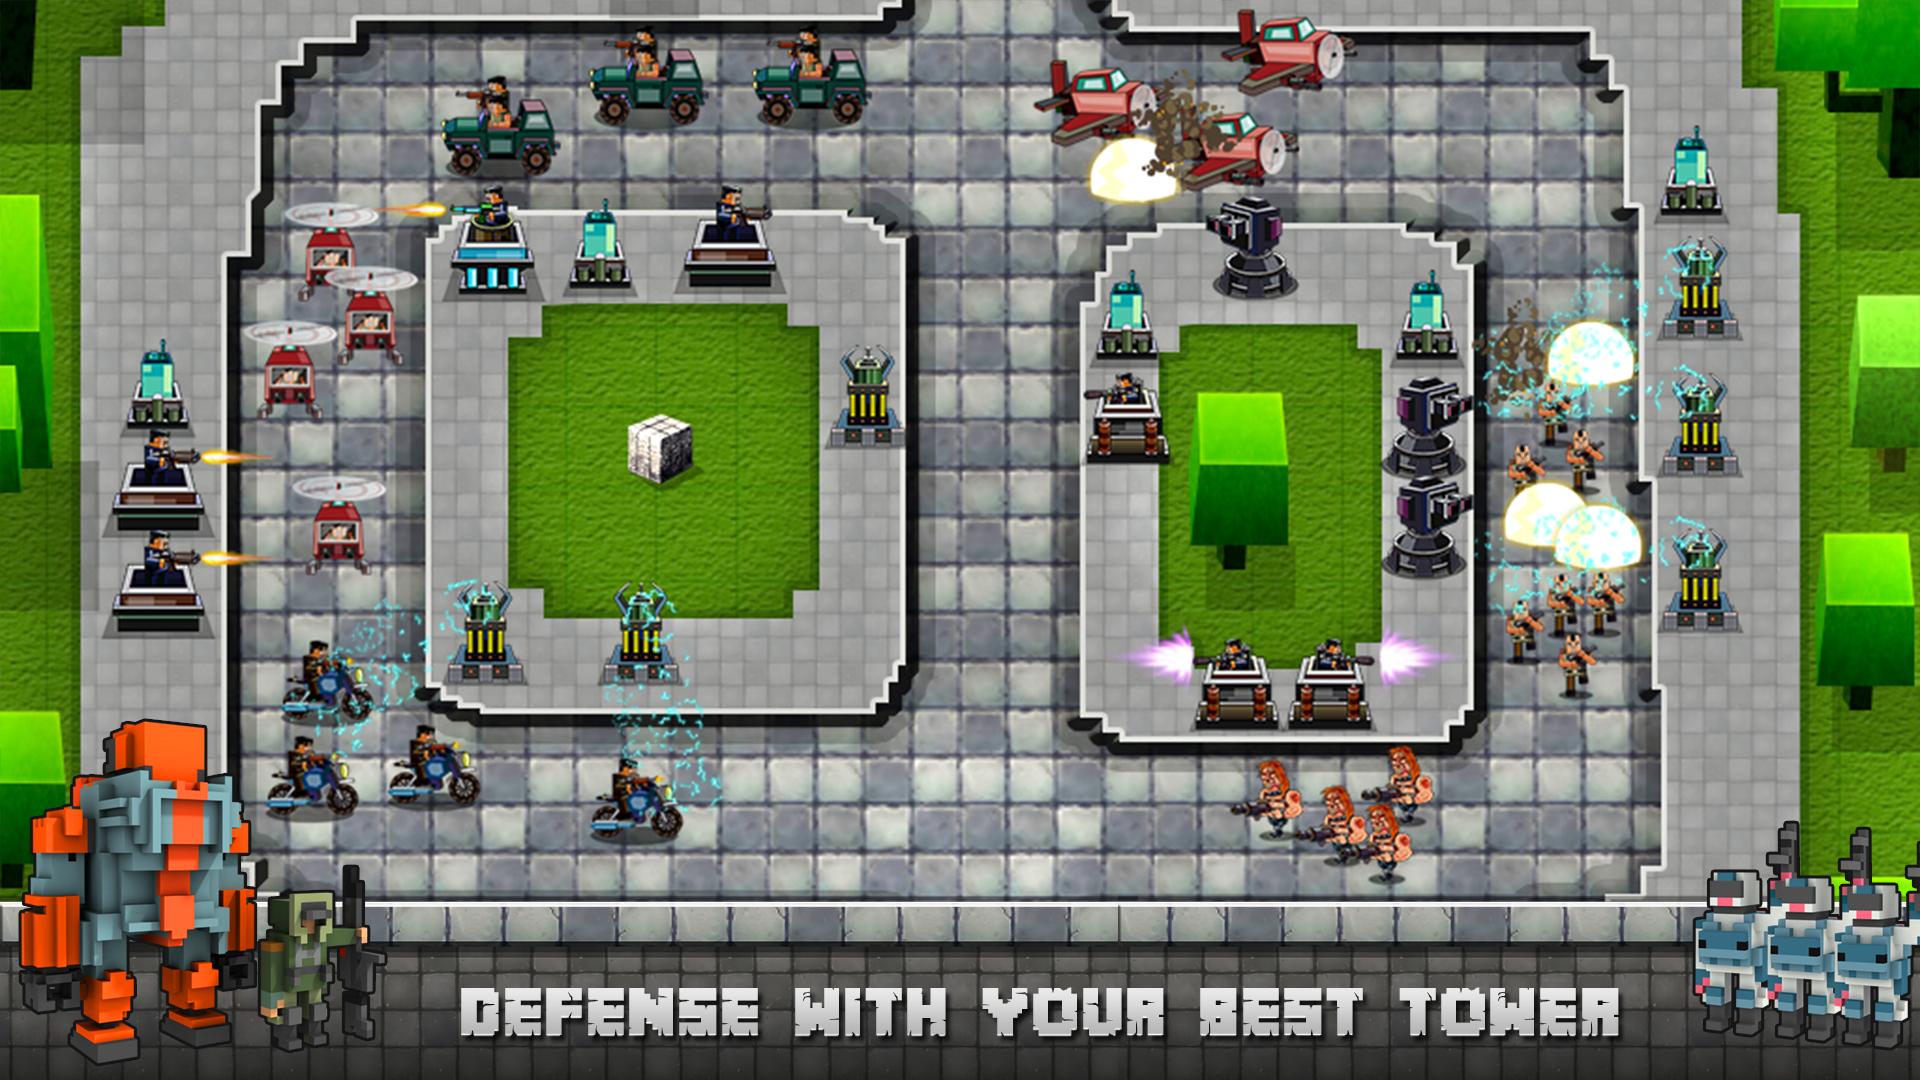 Tower defense майнкрафт карта. Игры Tower Defense кубики. ТОВЕР дефенс майнкрафт. Защита башни.